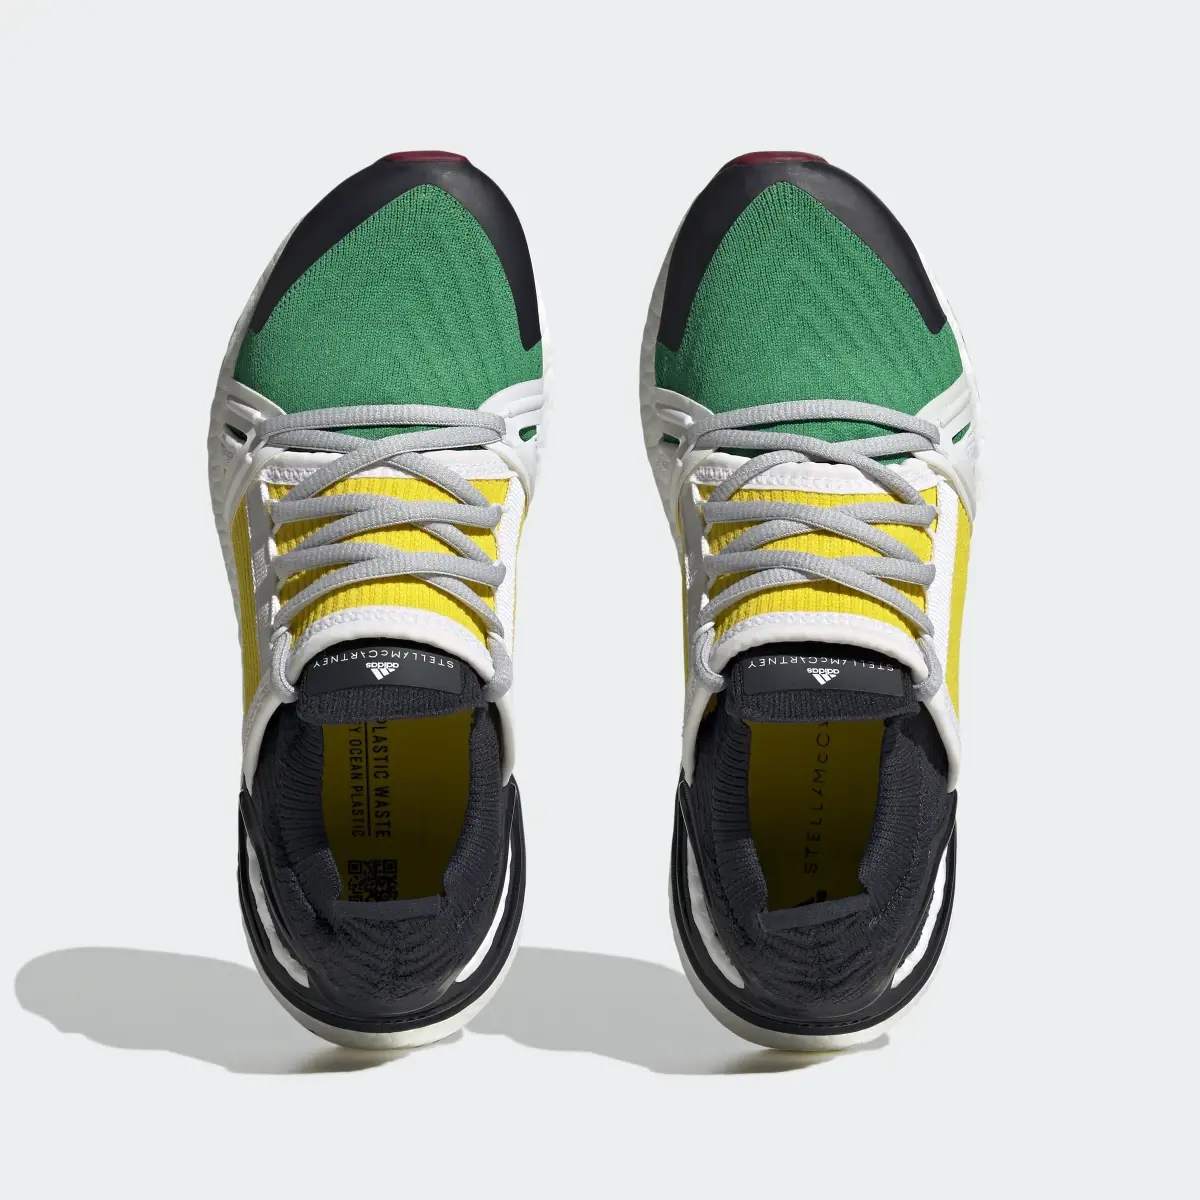 Adidas by Stella McCartney Ultraboost 20 Shoes. 3